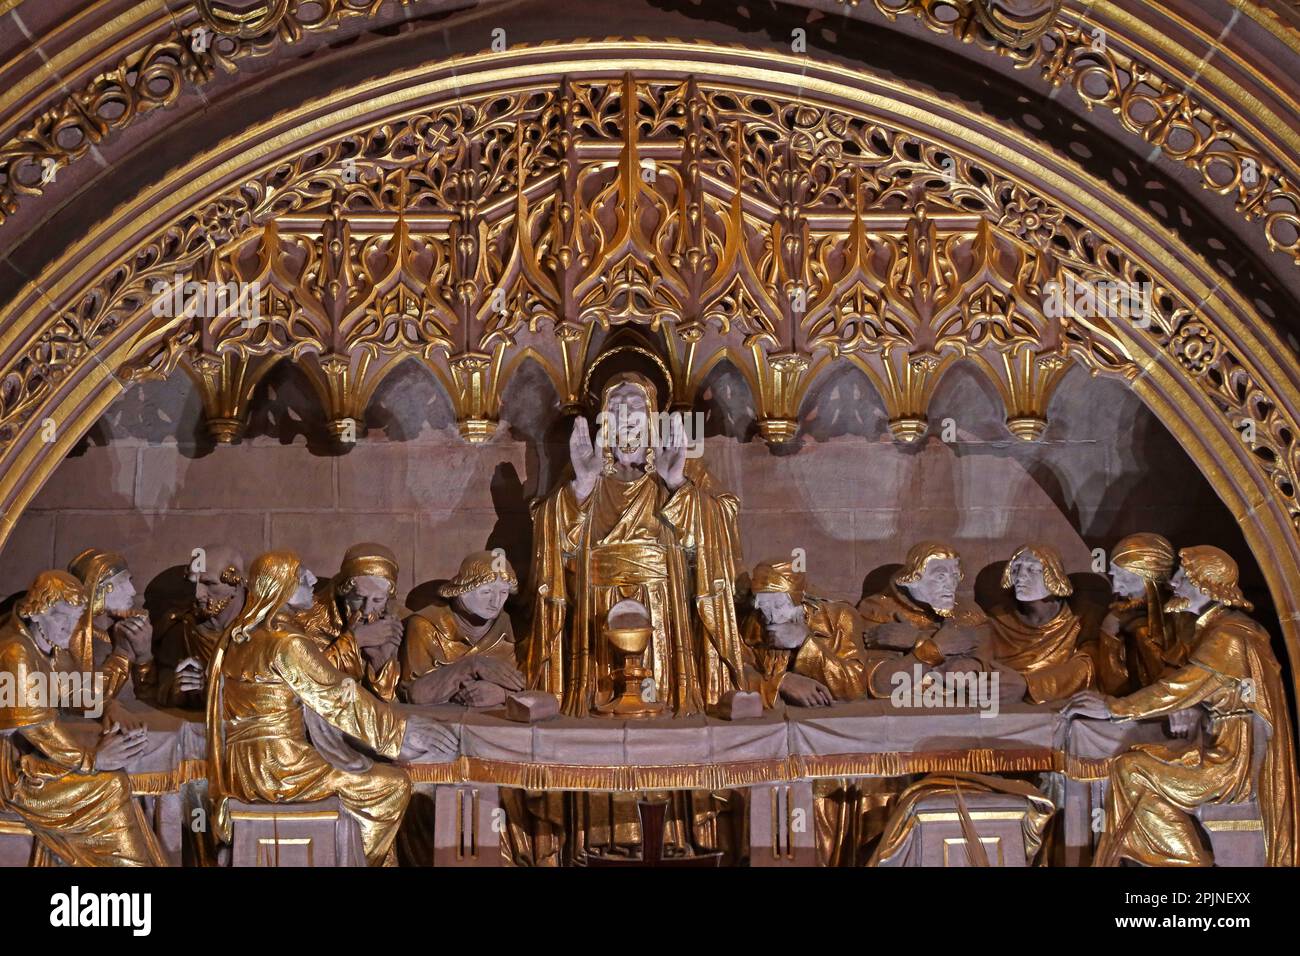 Letztes Abendmahl frieze, auf dem Altar in der anglikanischen Kathedrale, St. James' Mount, Liverpool, Merseyside, England, UK, L1 7AZ Stockfoto